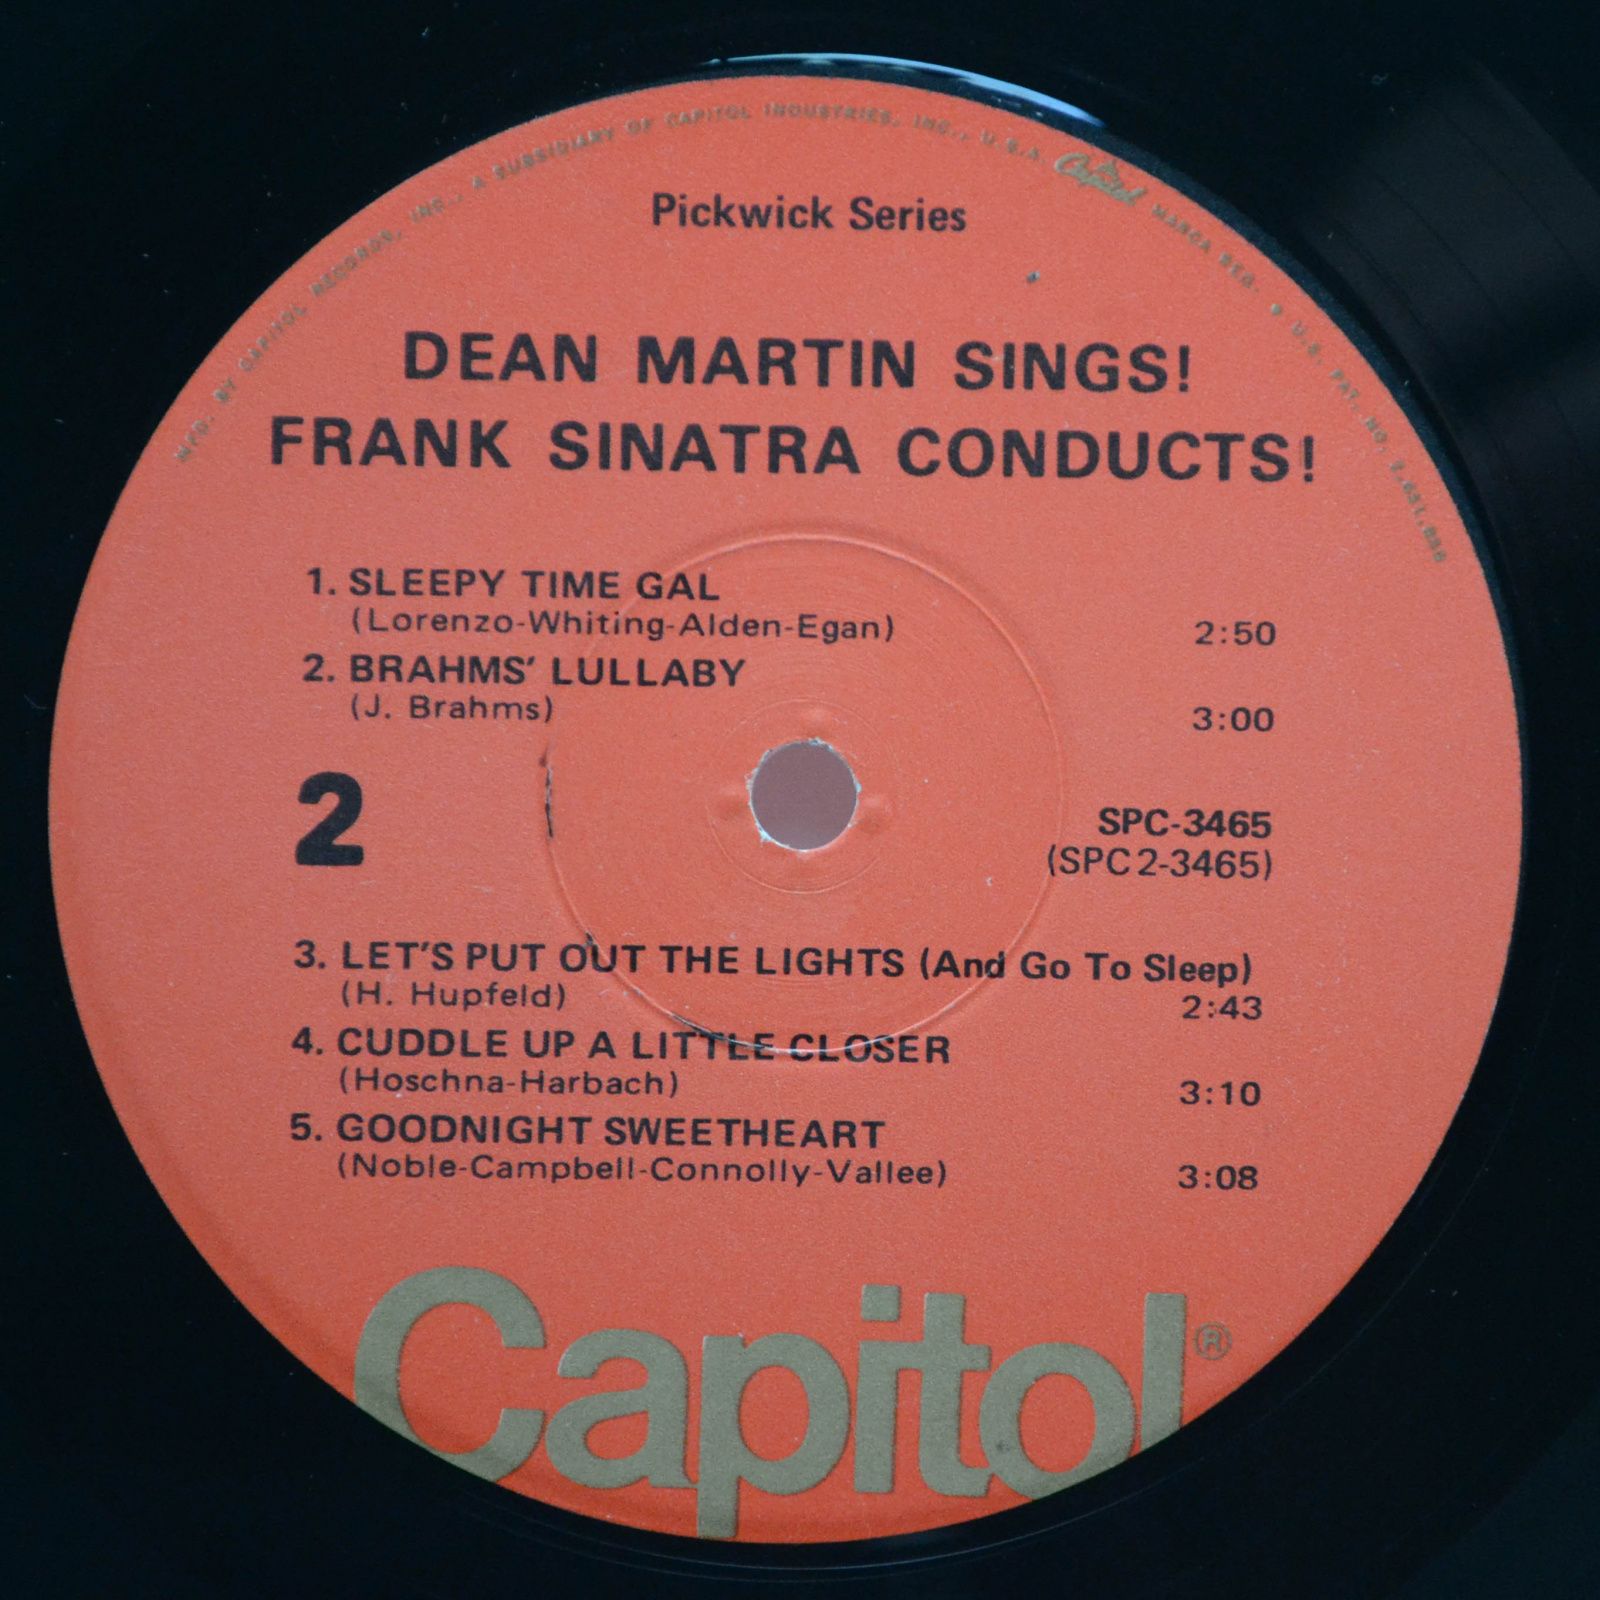 Dean Martin & Frank Sinatra — Dean Martin Sings! Frank Sinatra Conducts! (USA), 1959